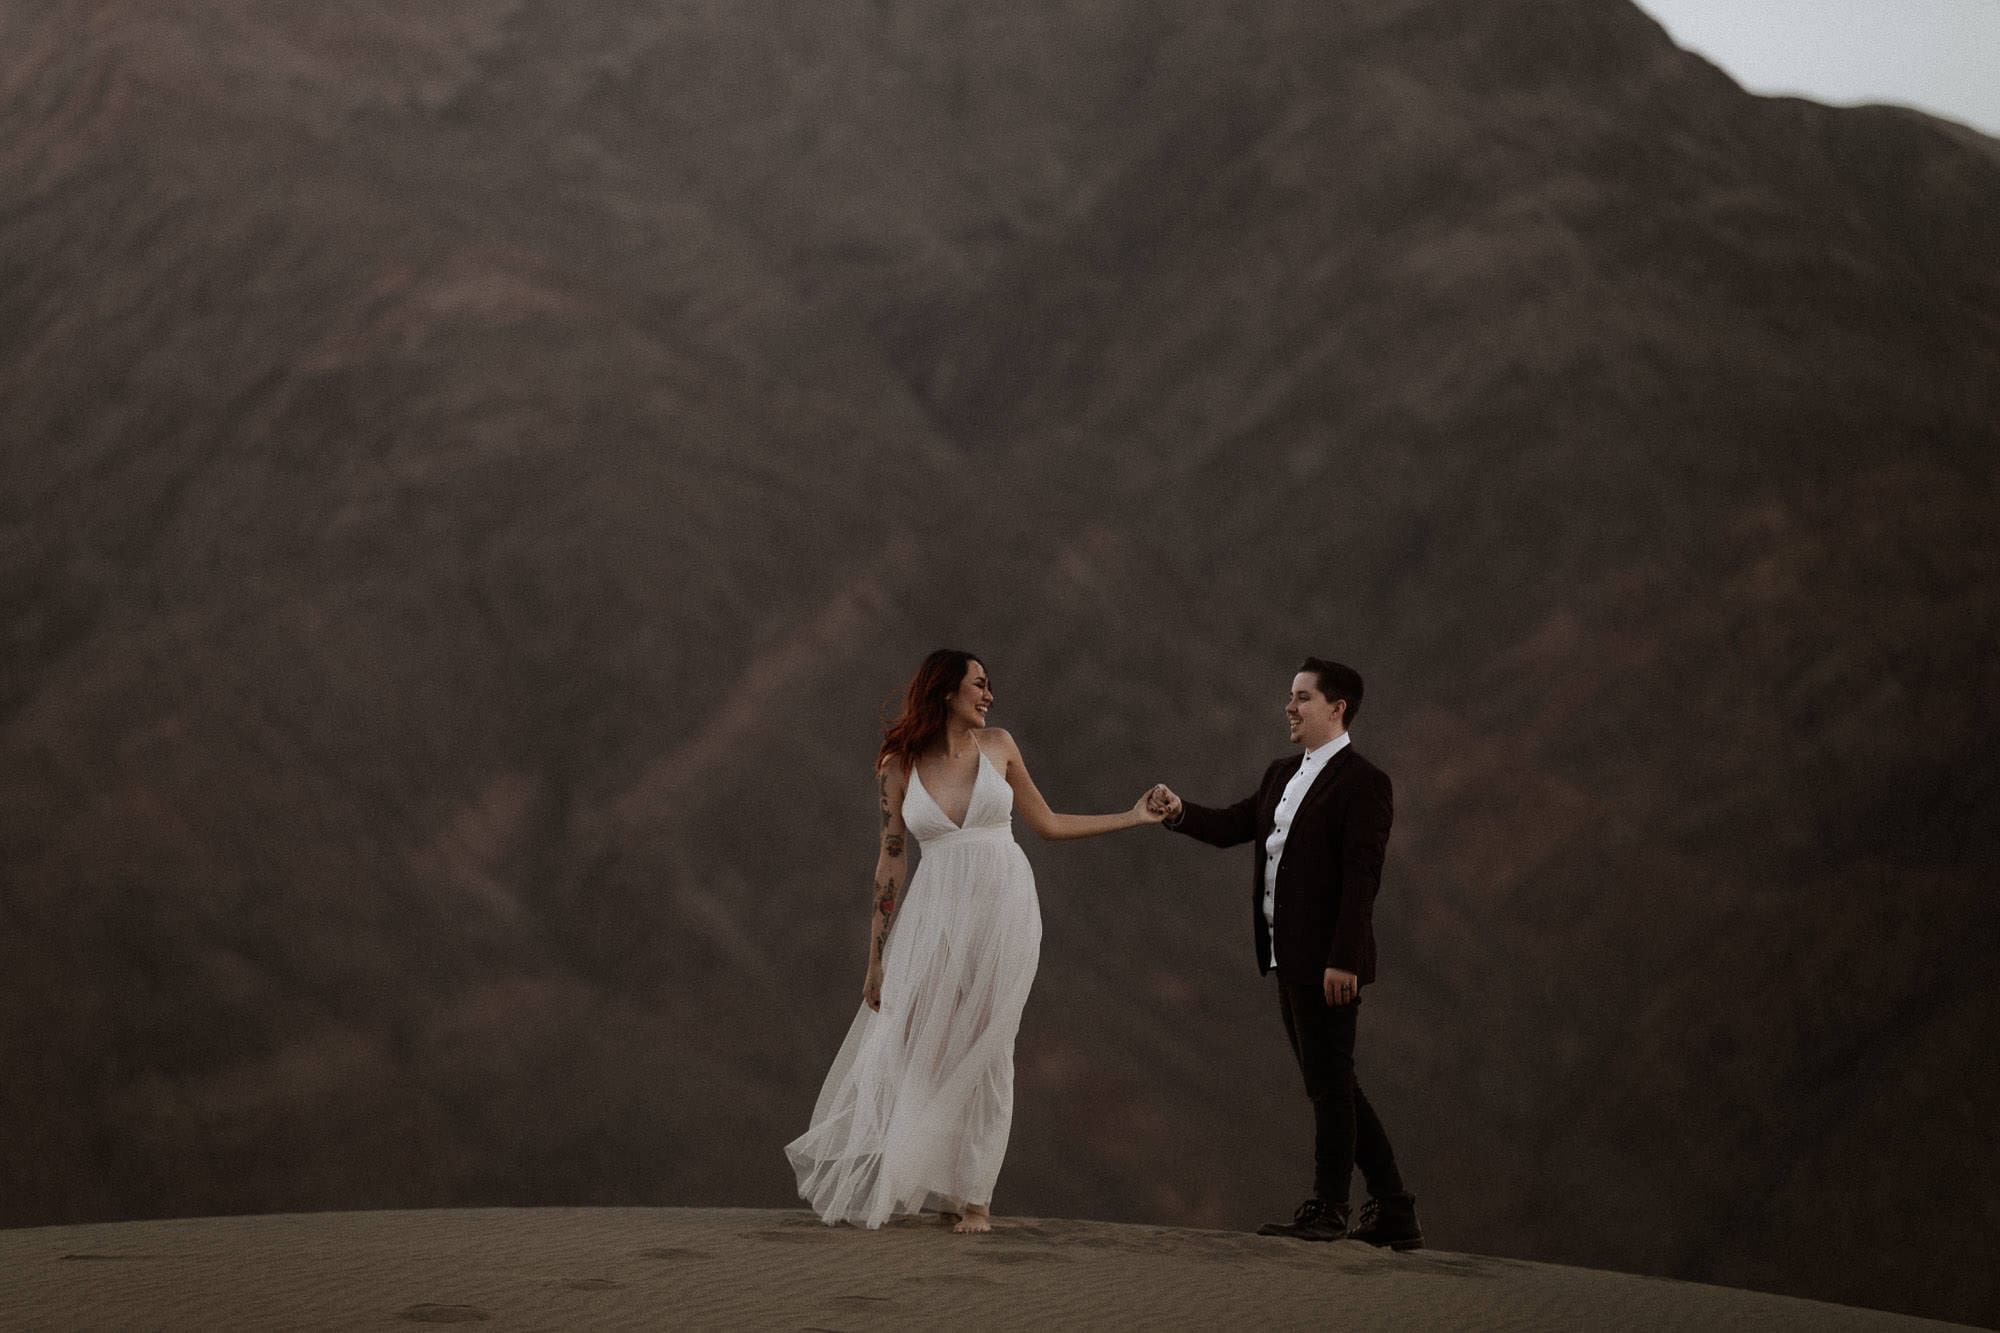 Adventure elopement in Mesquite Valley Sand Dunes at sunset